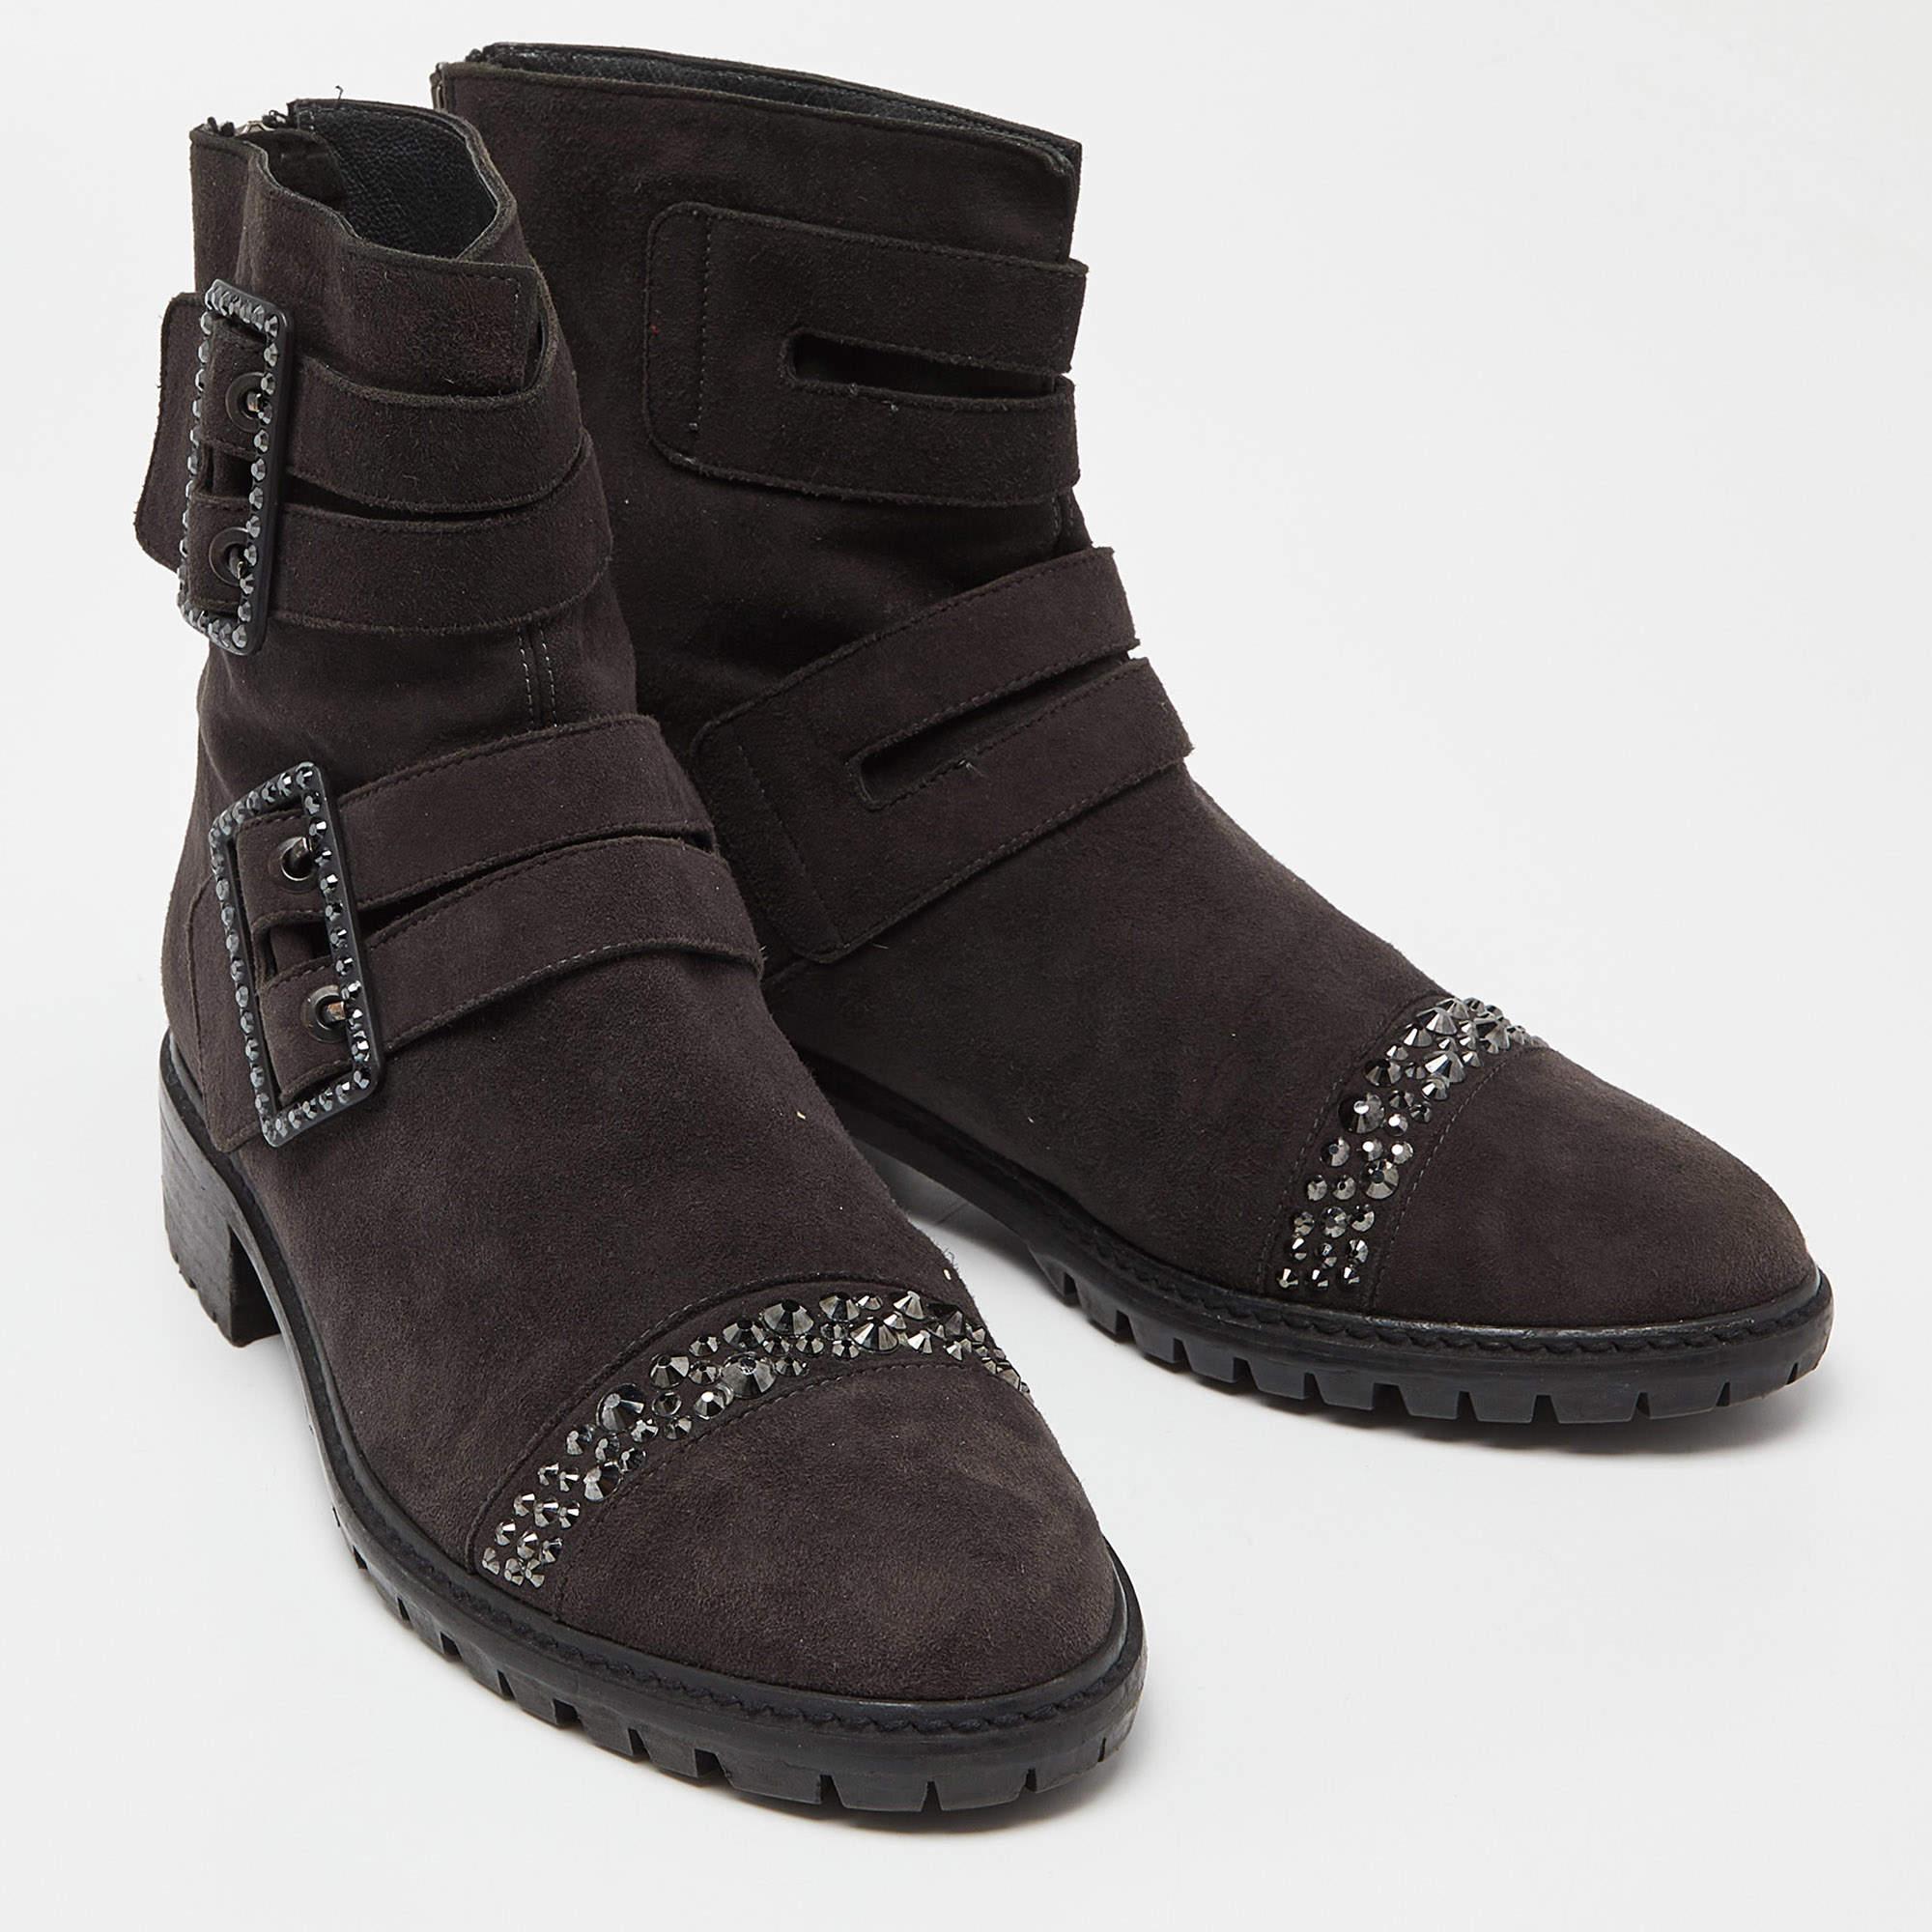 Stuart Weitzman Black Suede Crystal Embellished Ankle Length Boots Size 37.5 For Sale 1